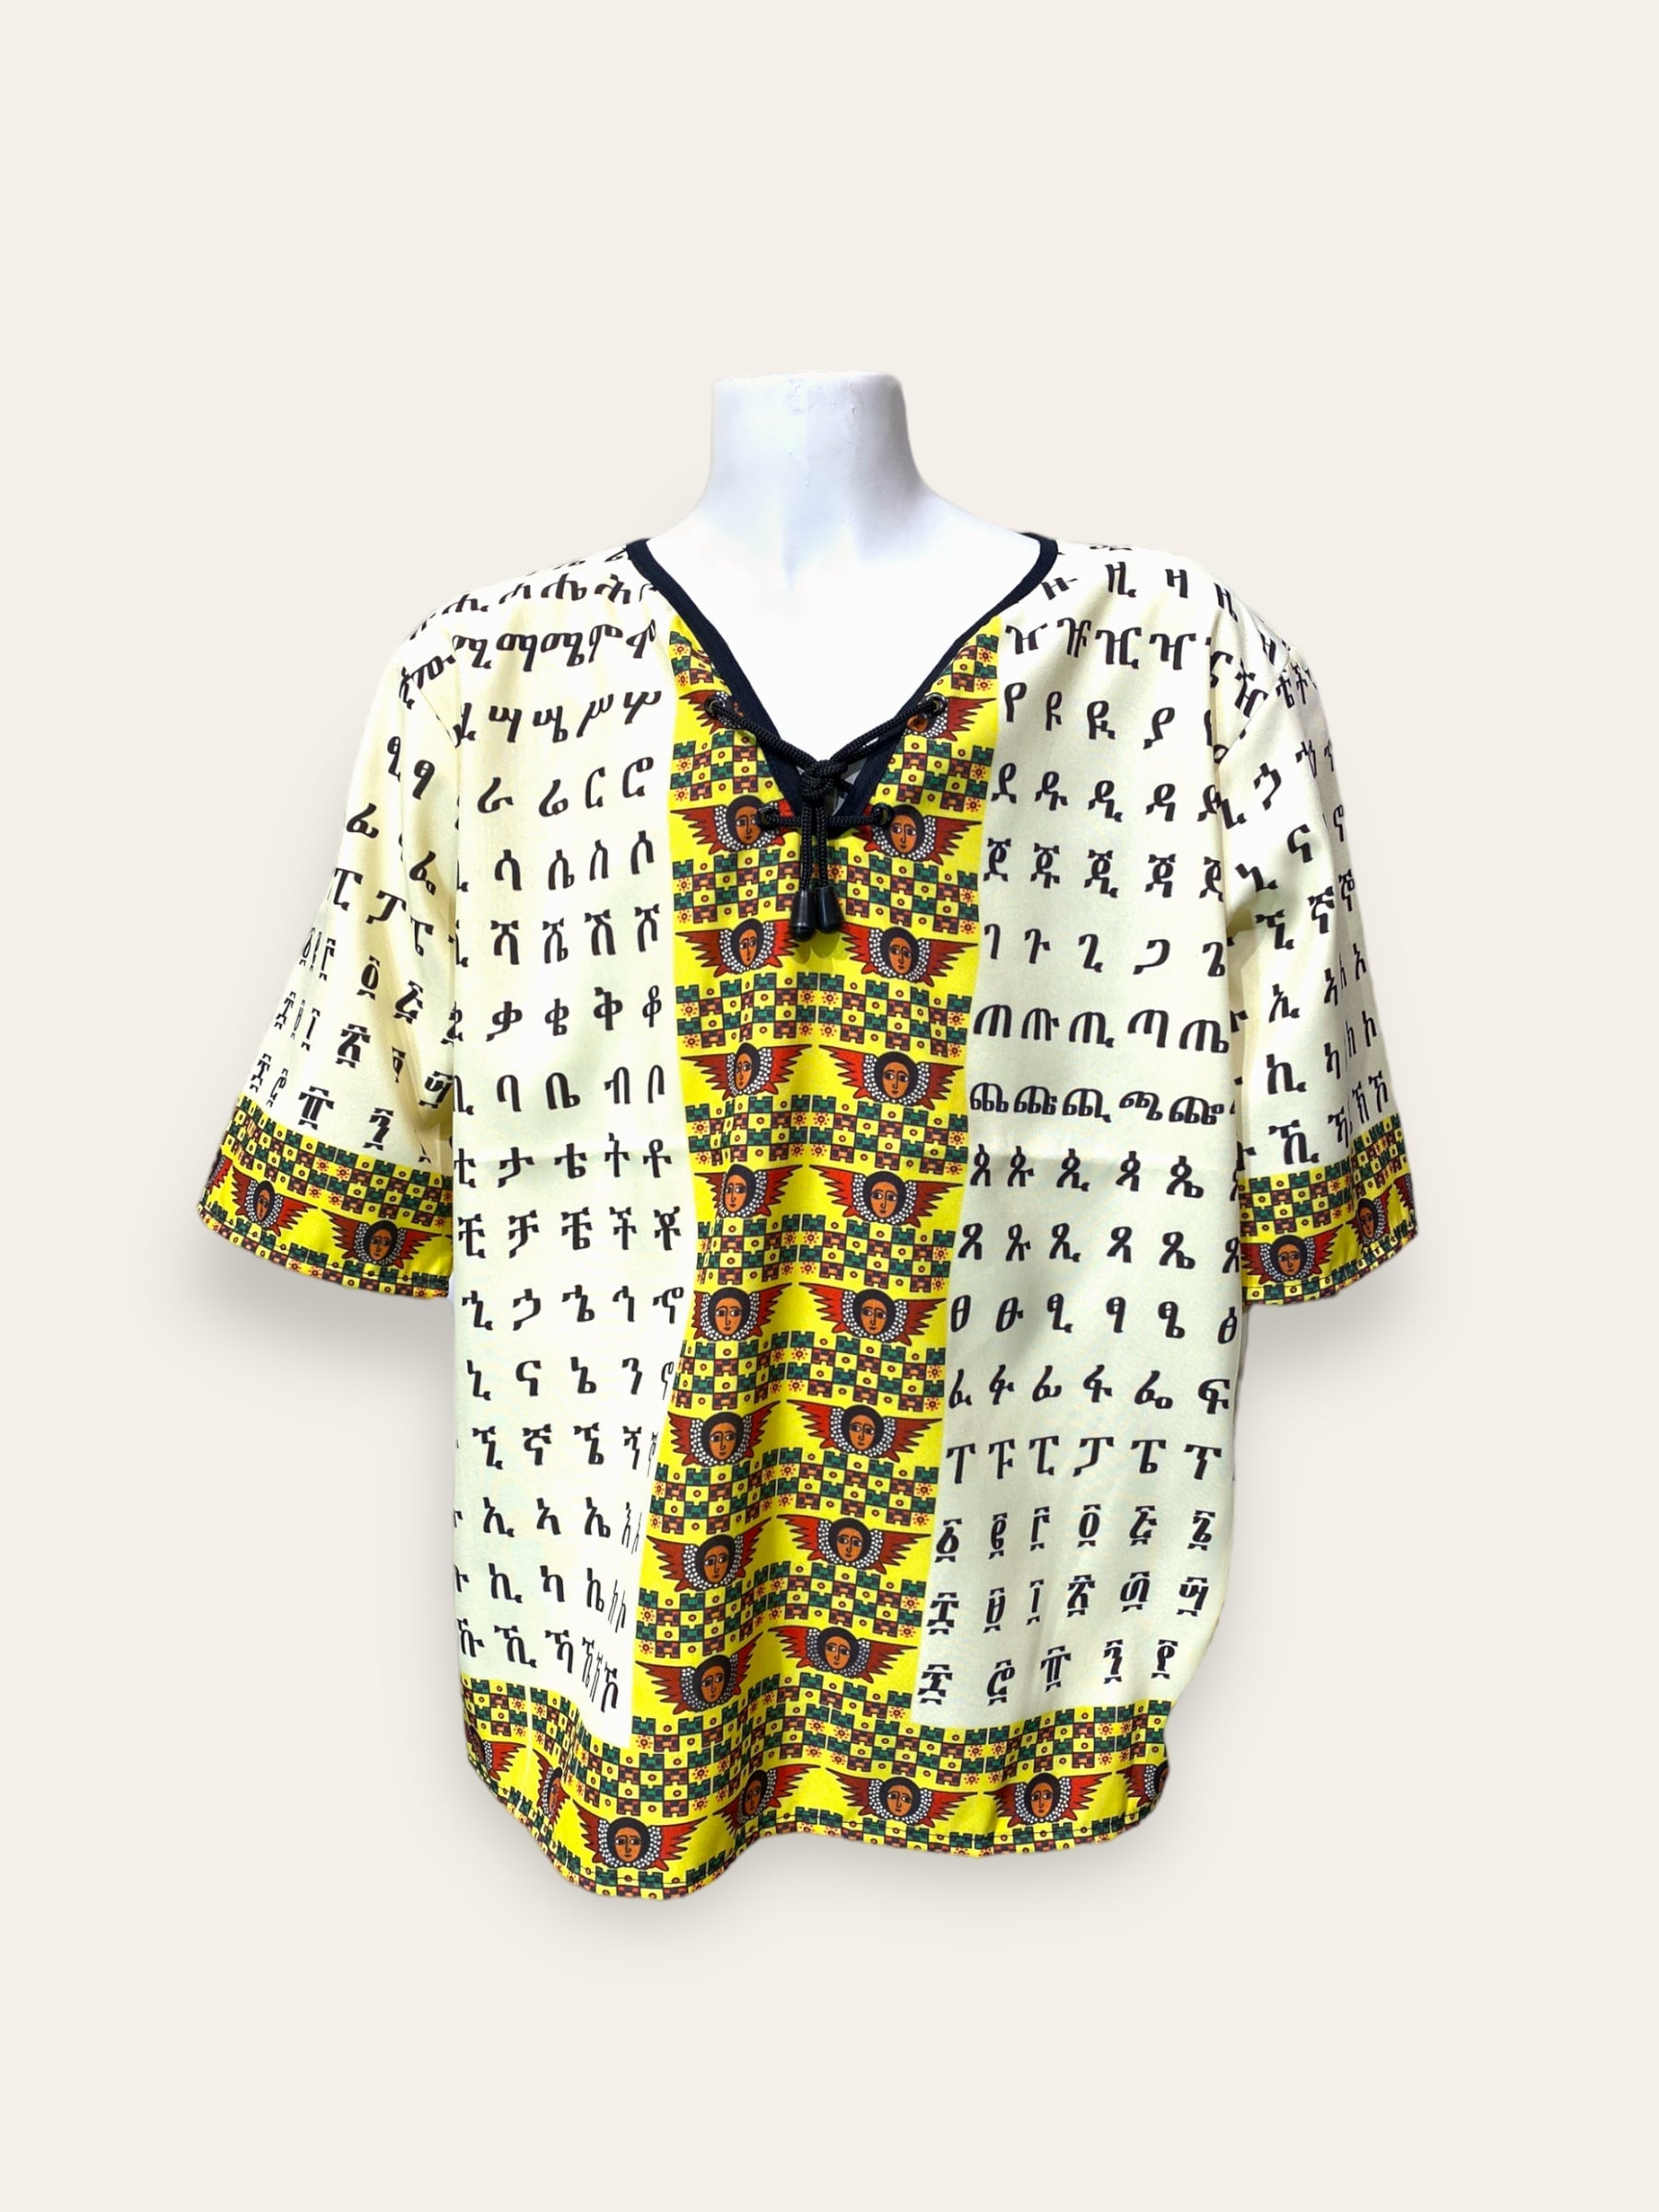 Traditional Eritrean/Ethiopian alphabet Shirt #3 Grmawit 